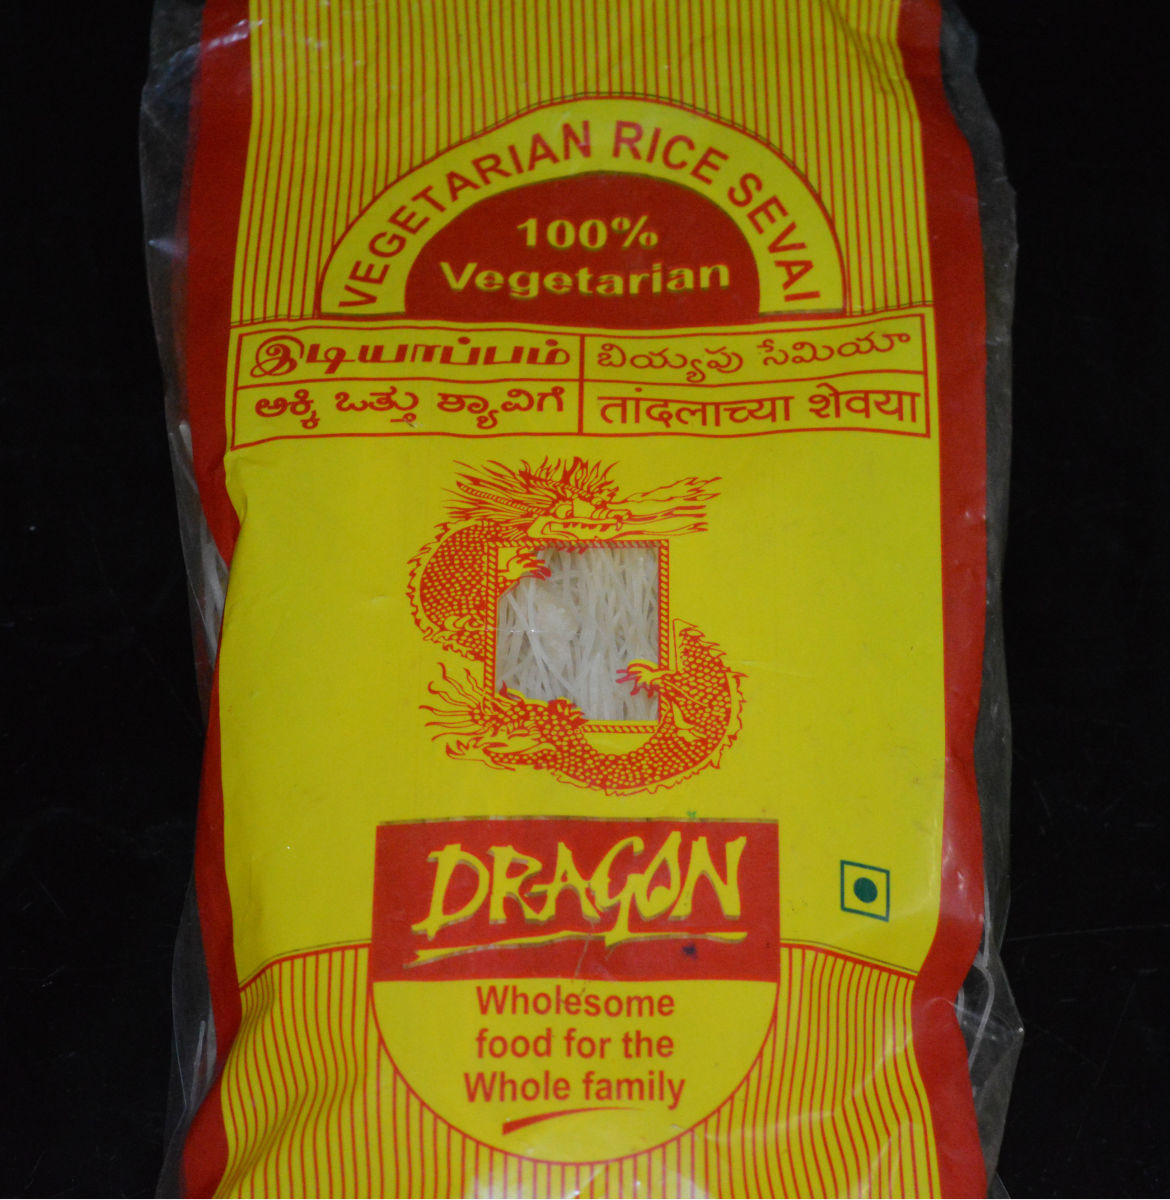 I used Dragon brand rice sevai.